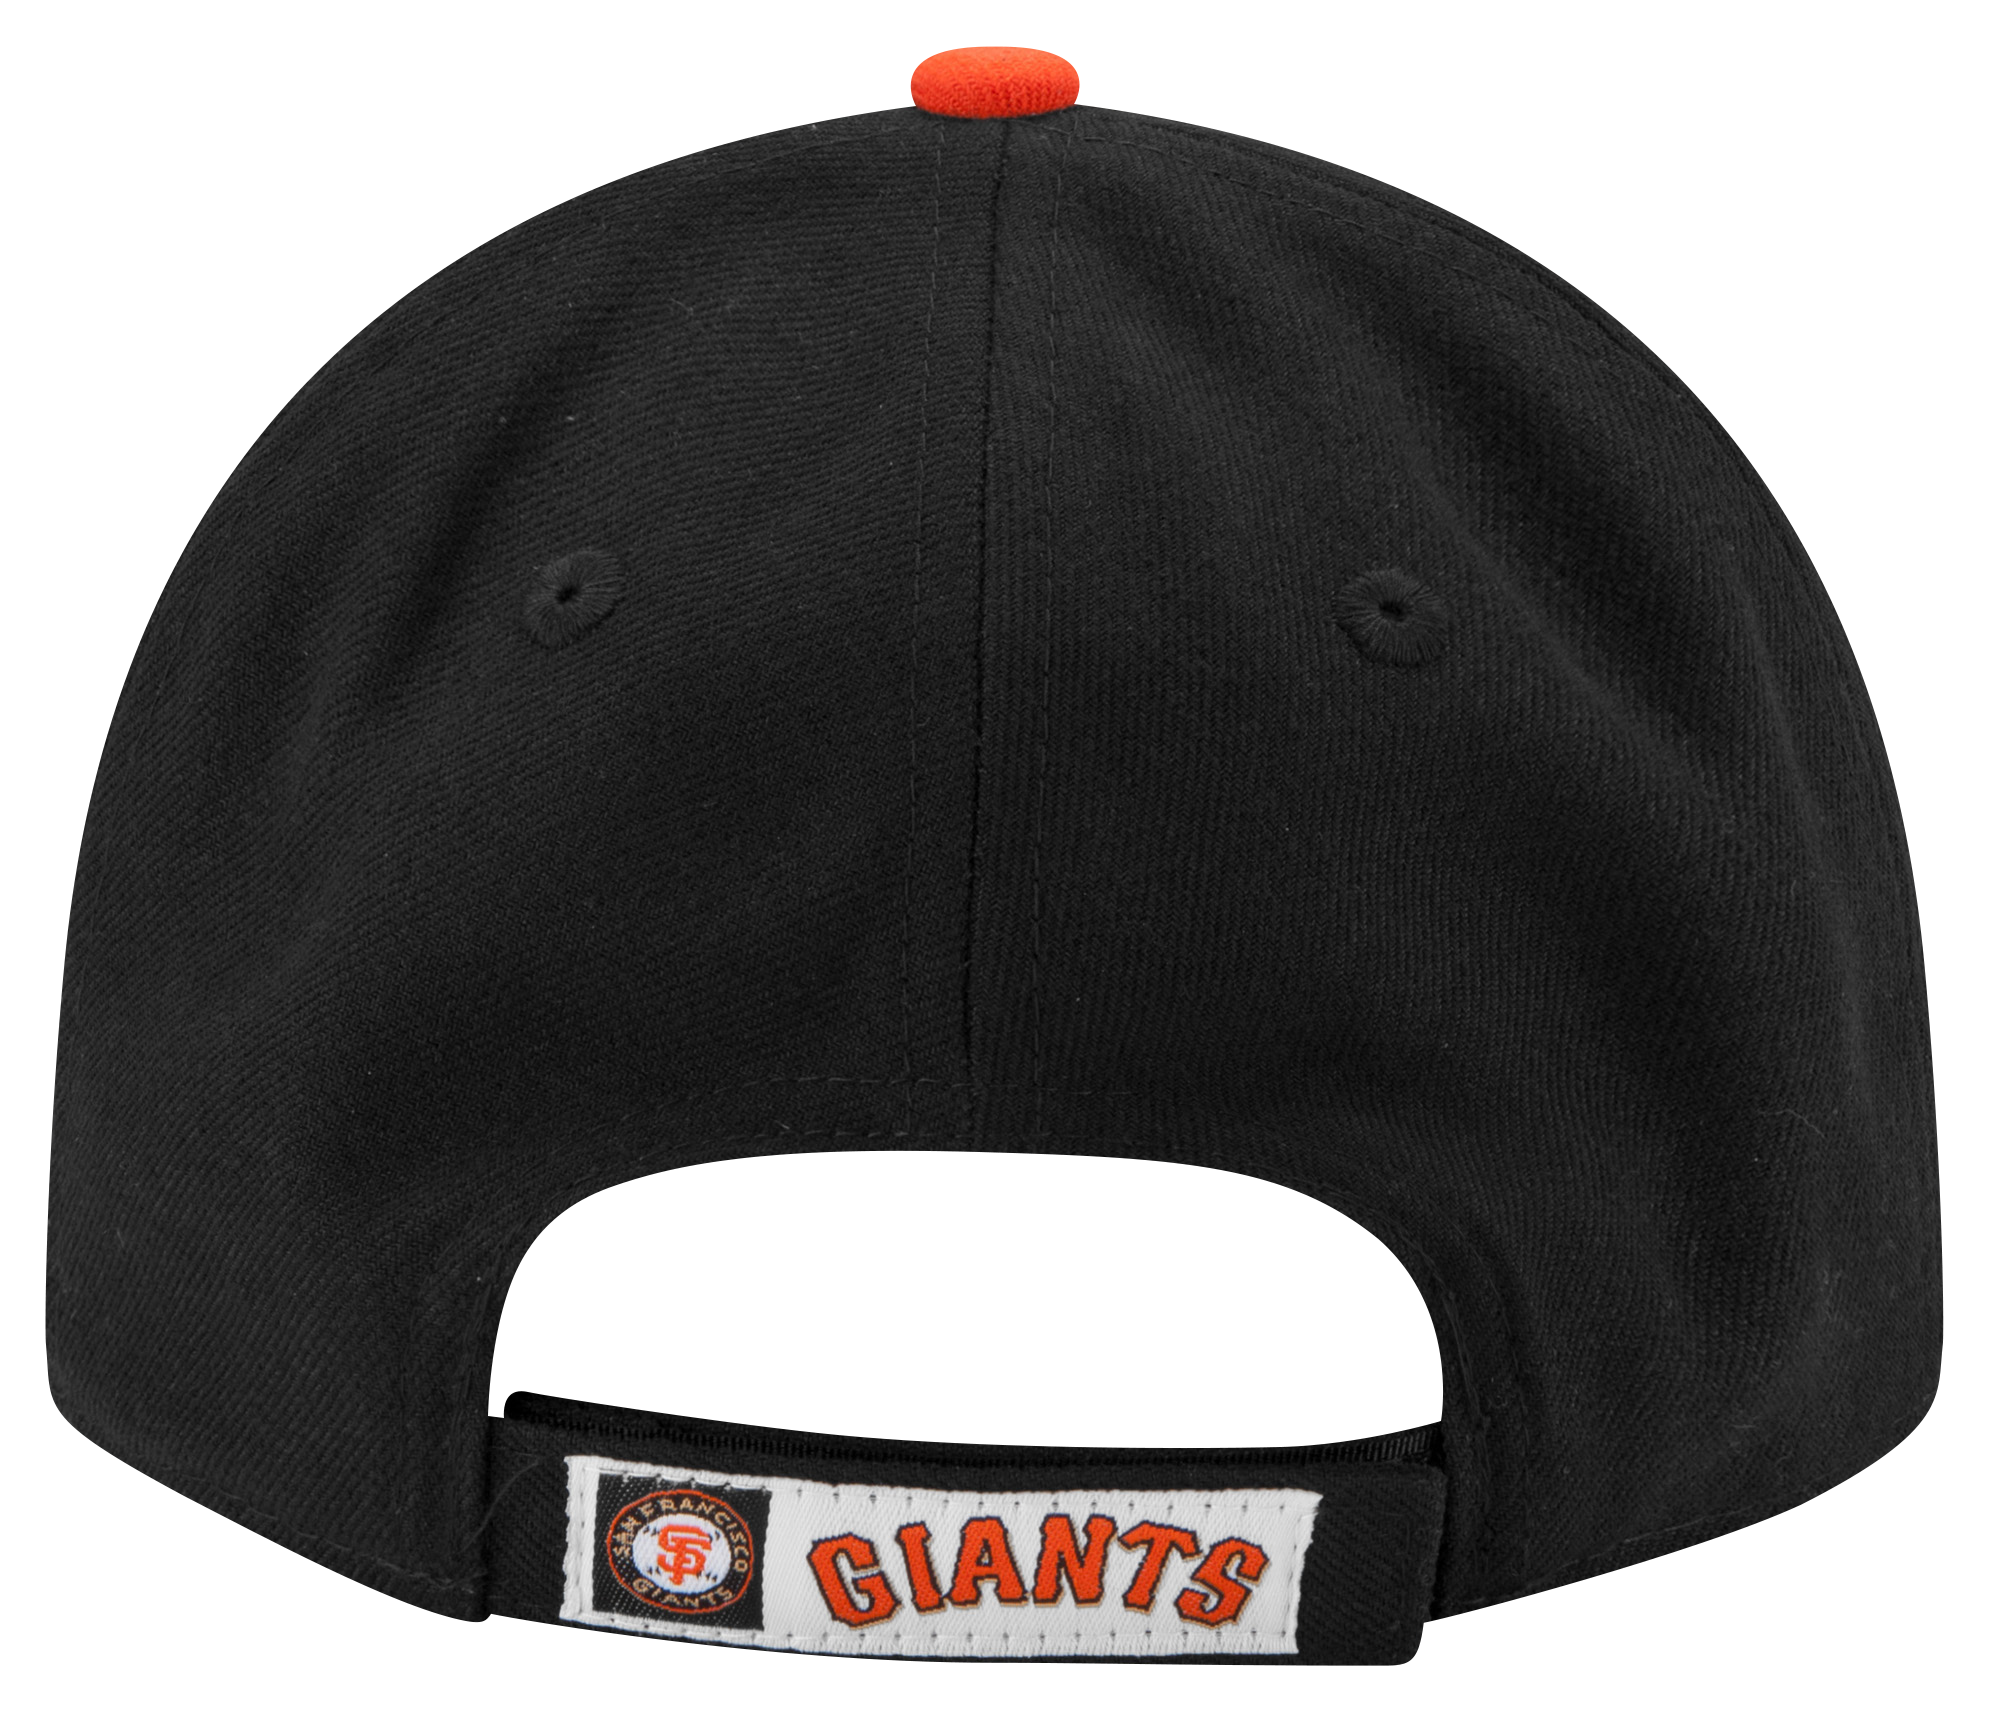 New Era Giants 9Forty Adjustable Cap